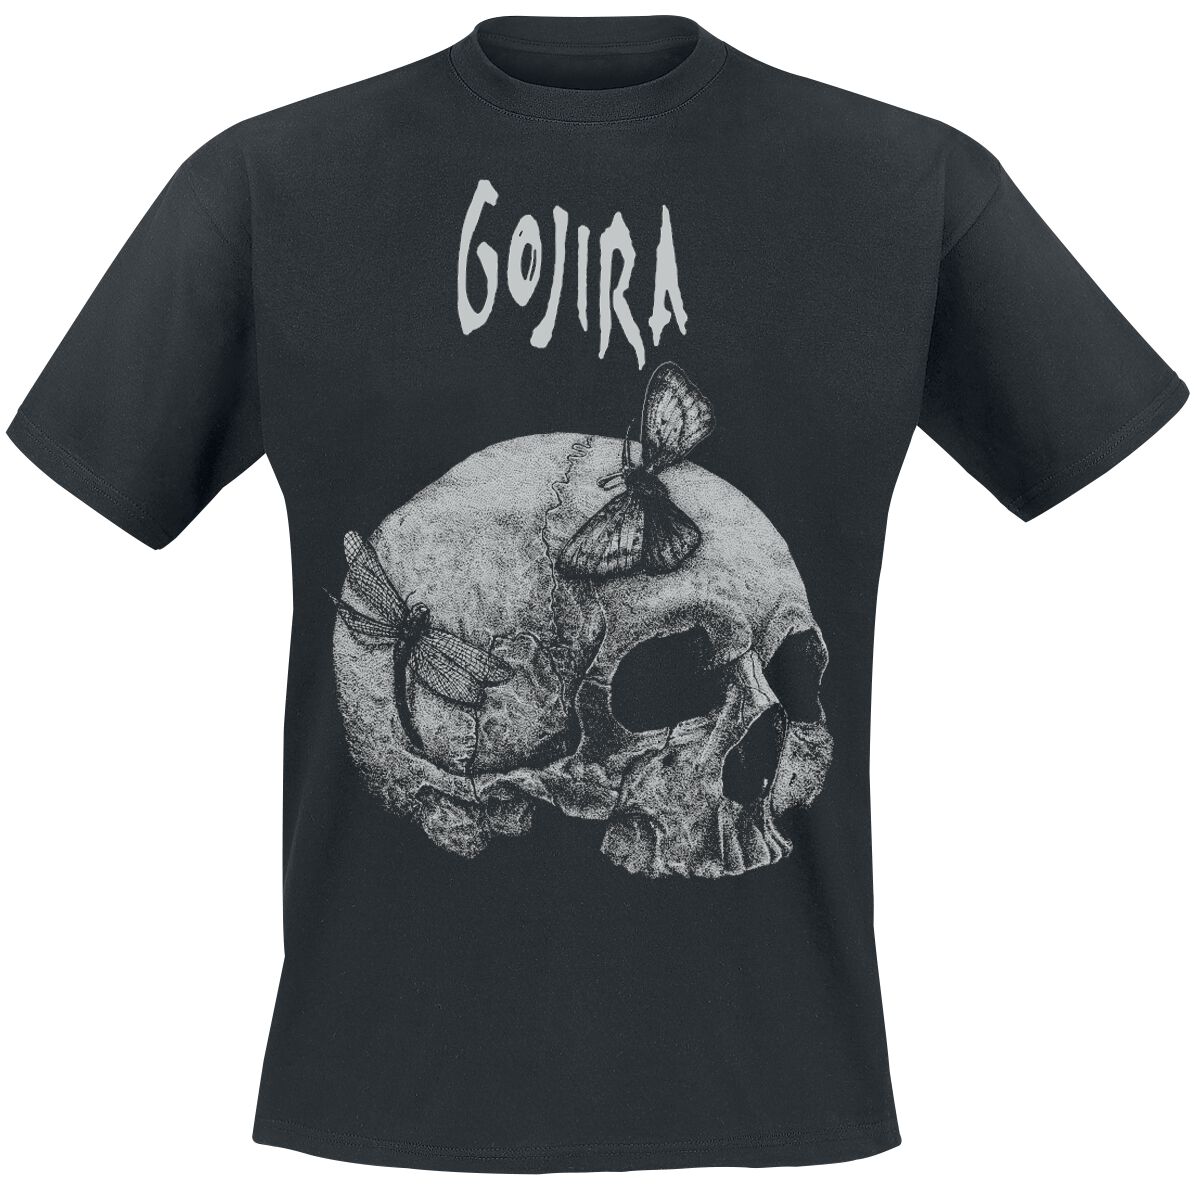 Gojira Moth Skull T-Shirt schwarz in L